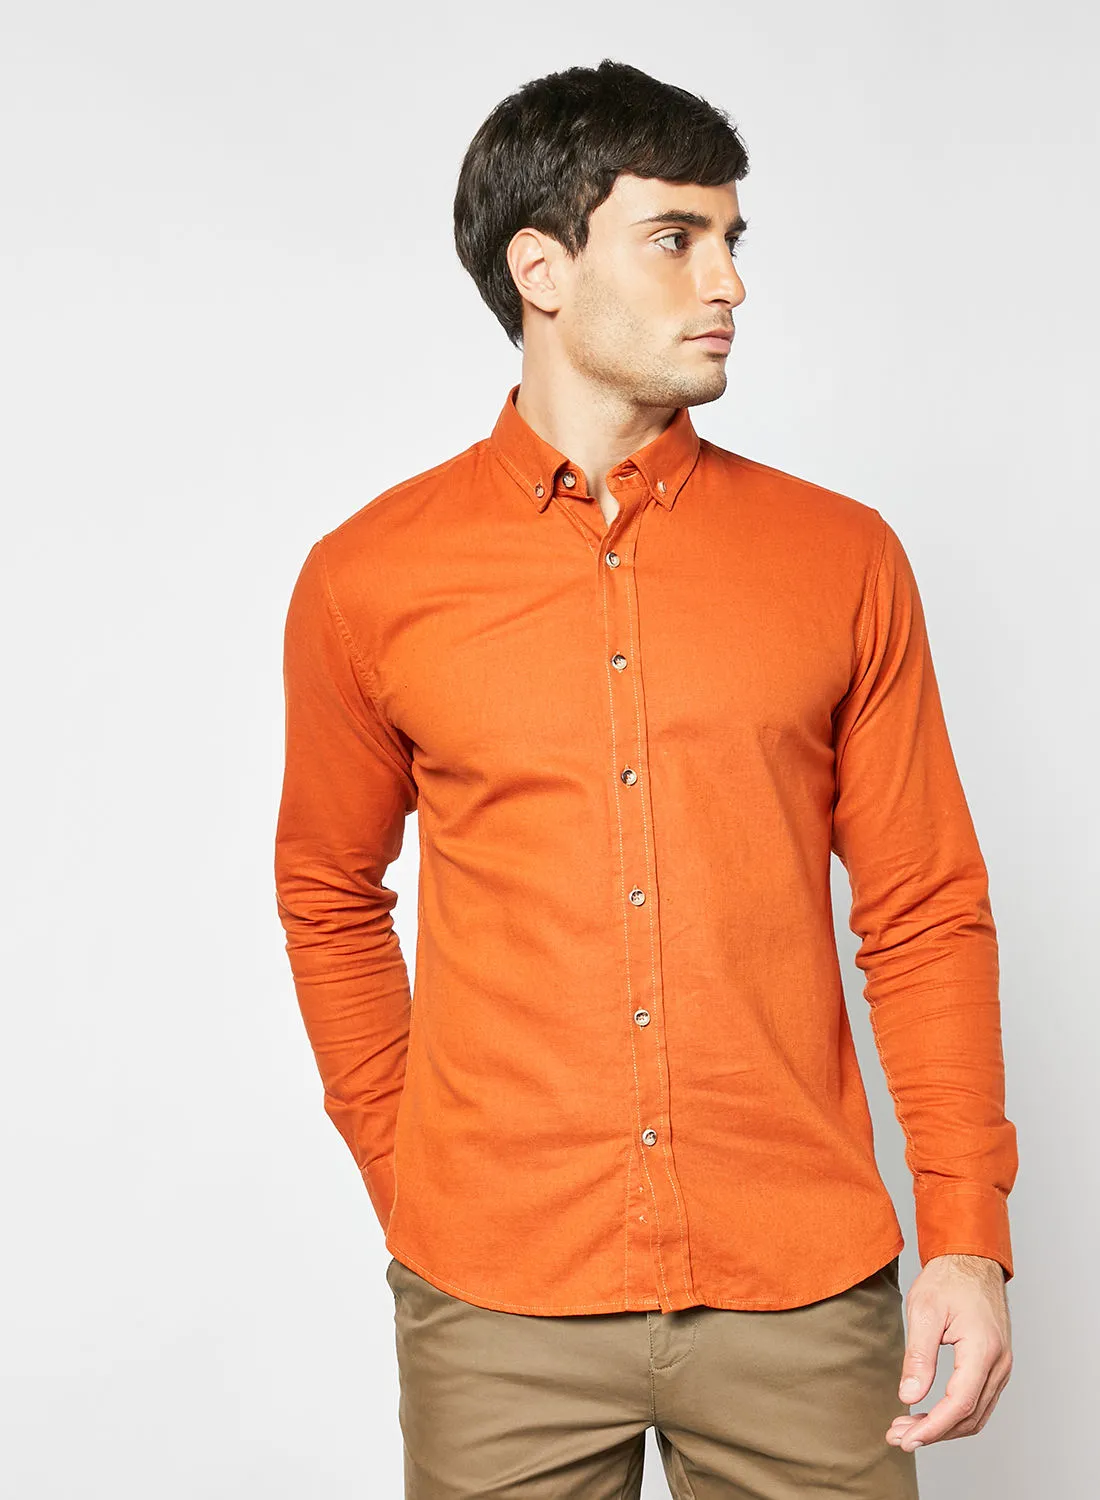 Sivvi x D'Atelier Button Down Shirt Orange